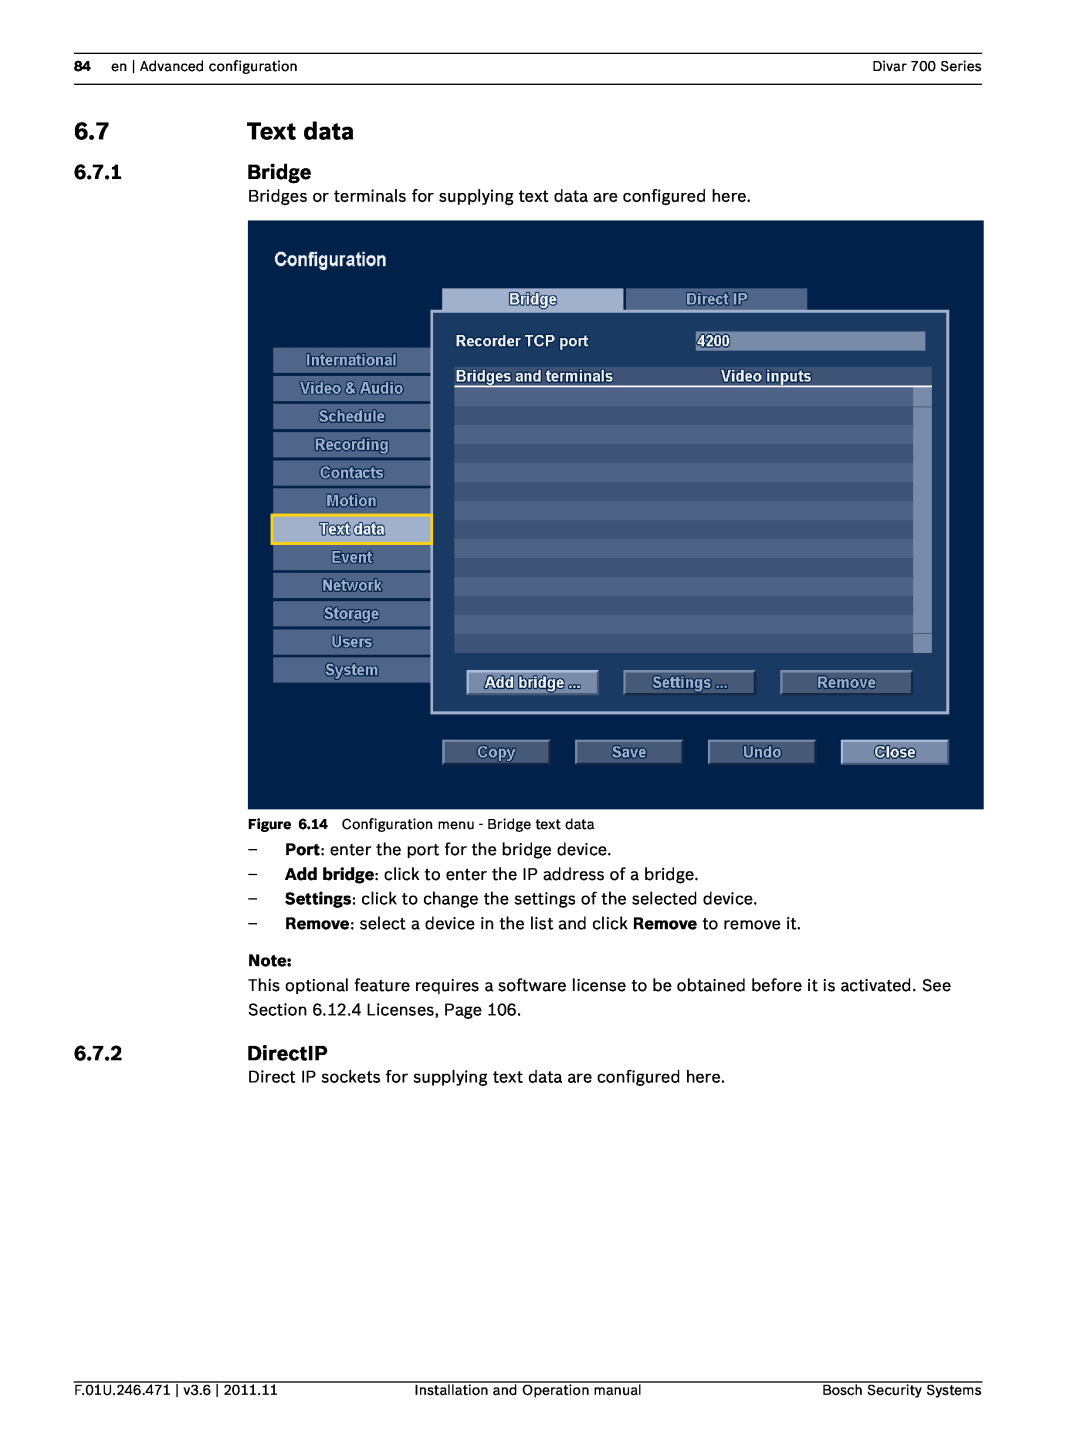 Bosch Appliances 700 operation manual Text data, 6.7.1Bridge, 6.7.2DirectIP 